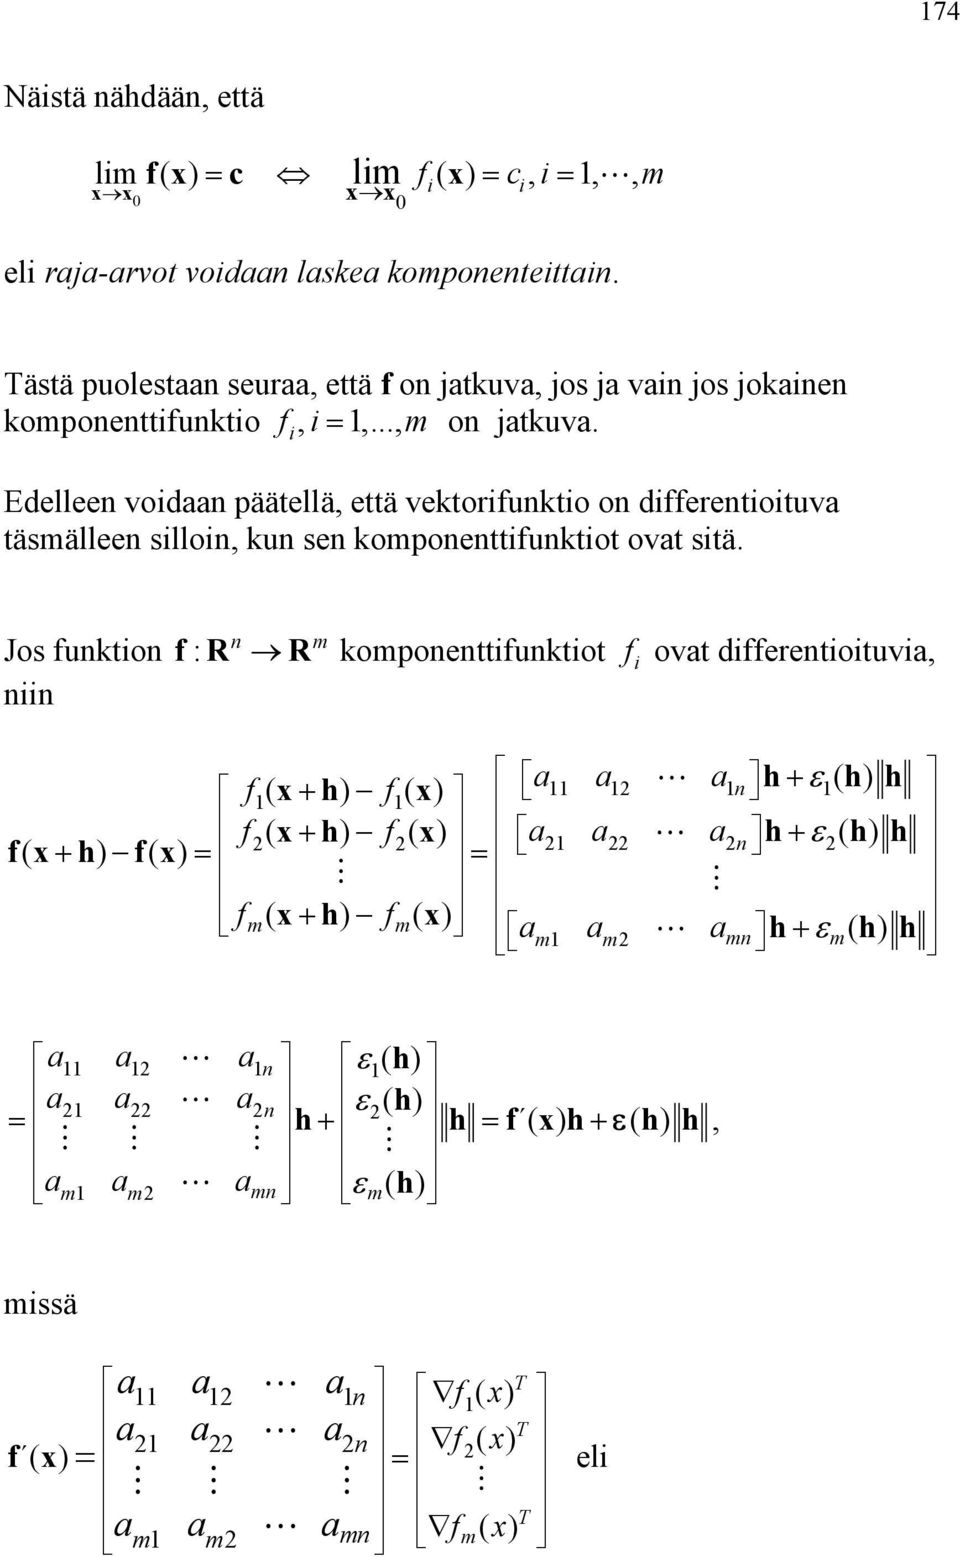 komponenttfunktot ovat stä n m Jos funkton f: R R komponenttfunktot f ovat dfferentotuva, nn ( ) ( ) a a a f f n ε ( ) x+ x + f( ) f( ) a a an ε( )